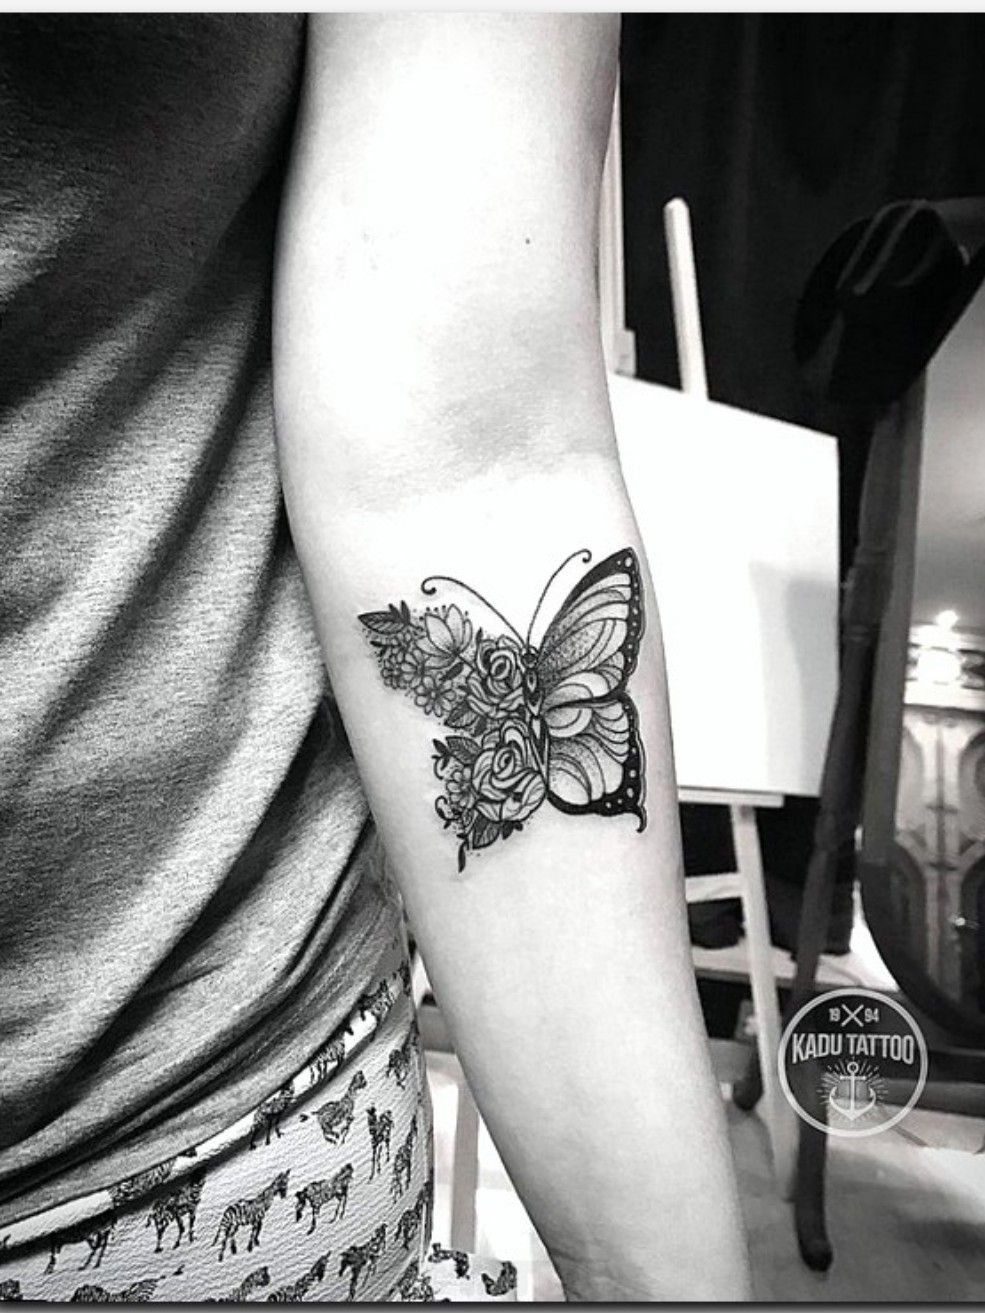 18441 Butterfly Flower Tattoo Images Stock Photos  Vectors  Shutterstock